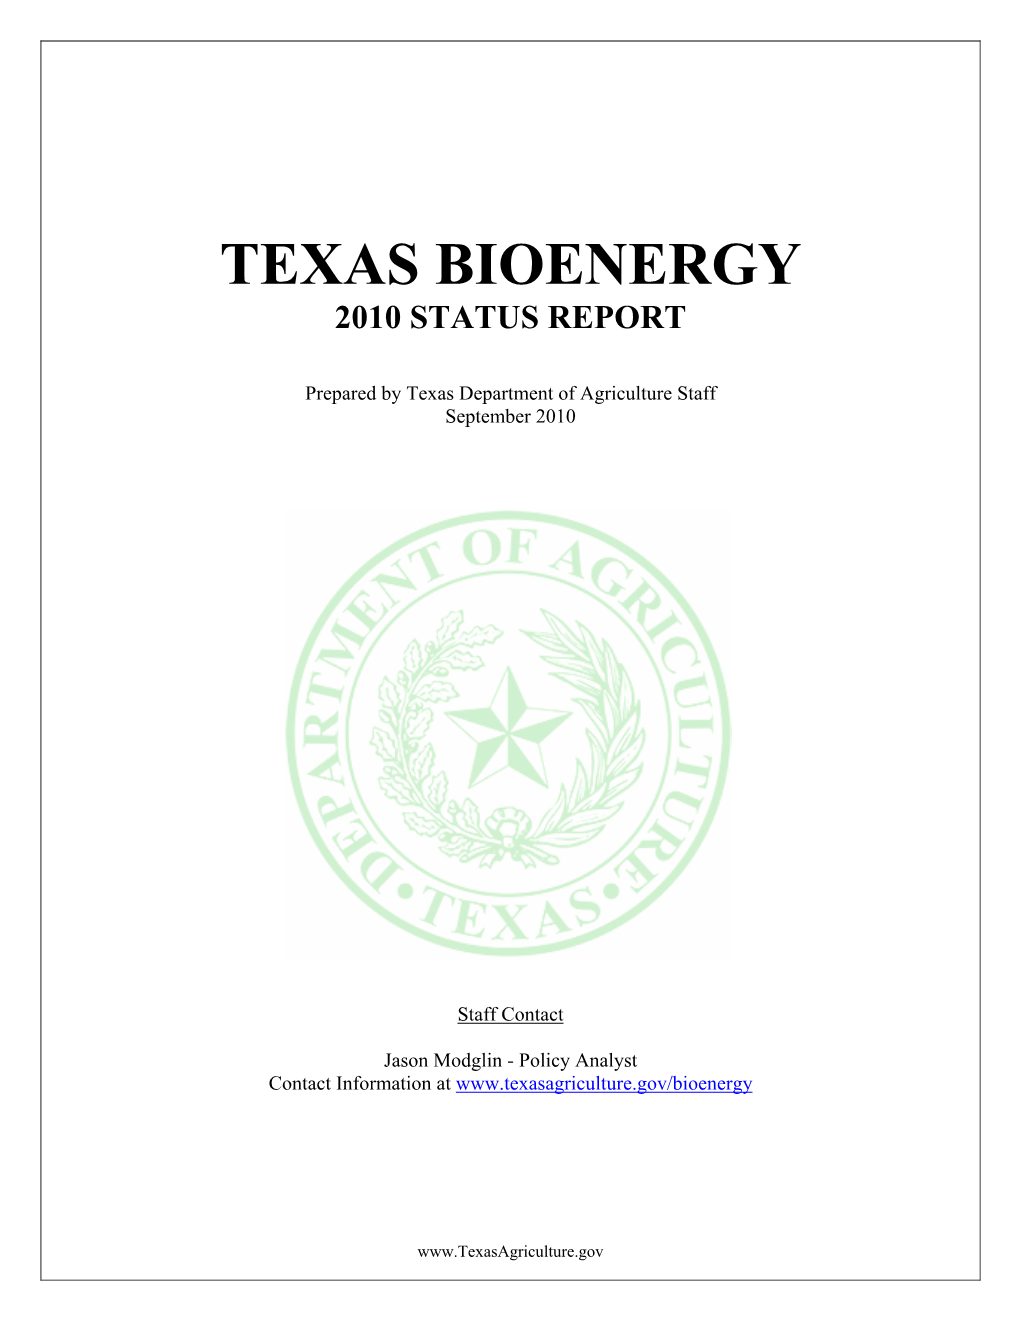 Texas Bioenergy Status Report, 2010. Texas Department of Agriculture